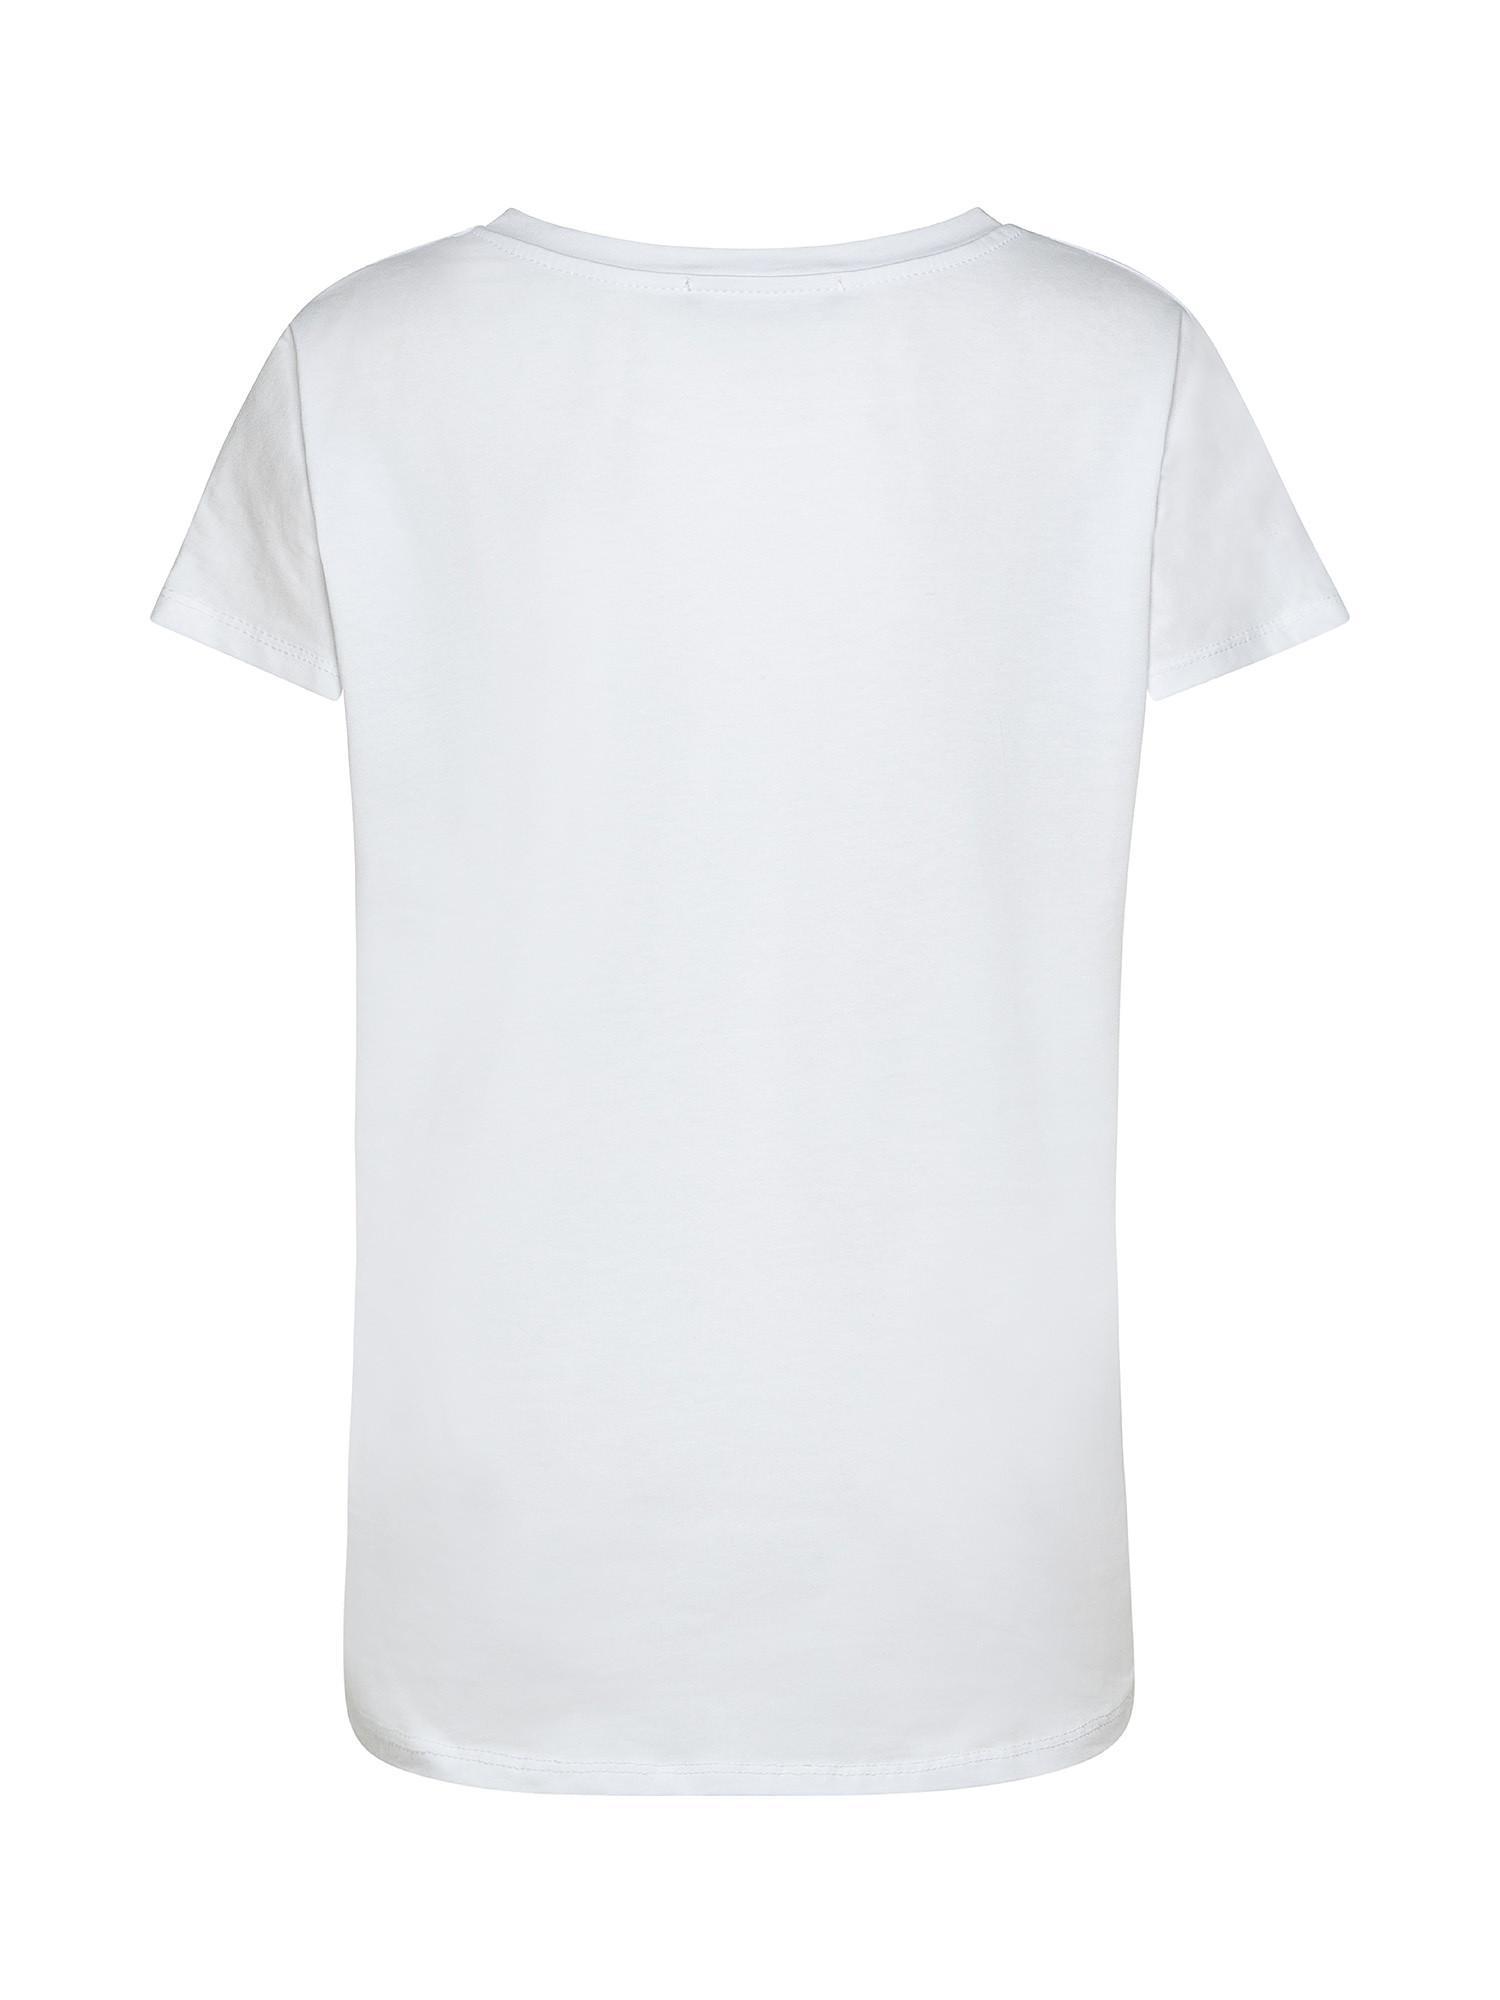 T-shirt con stampa cuori, Bianco, large image number 1